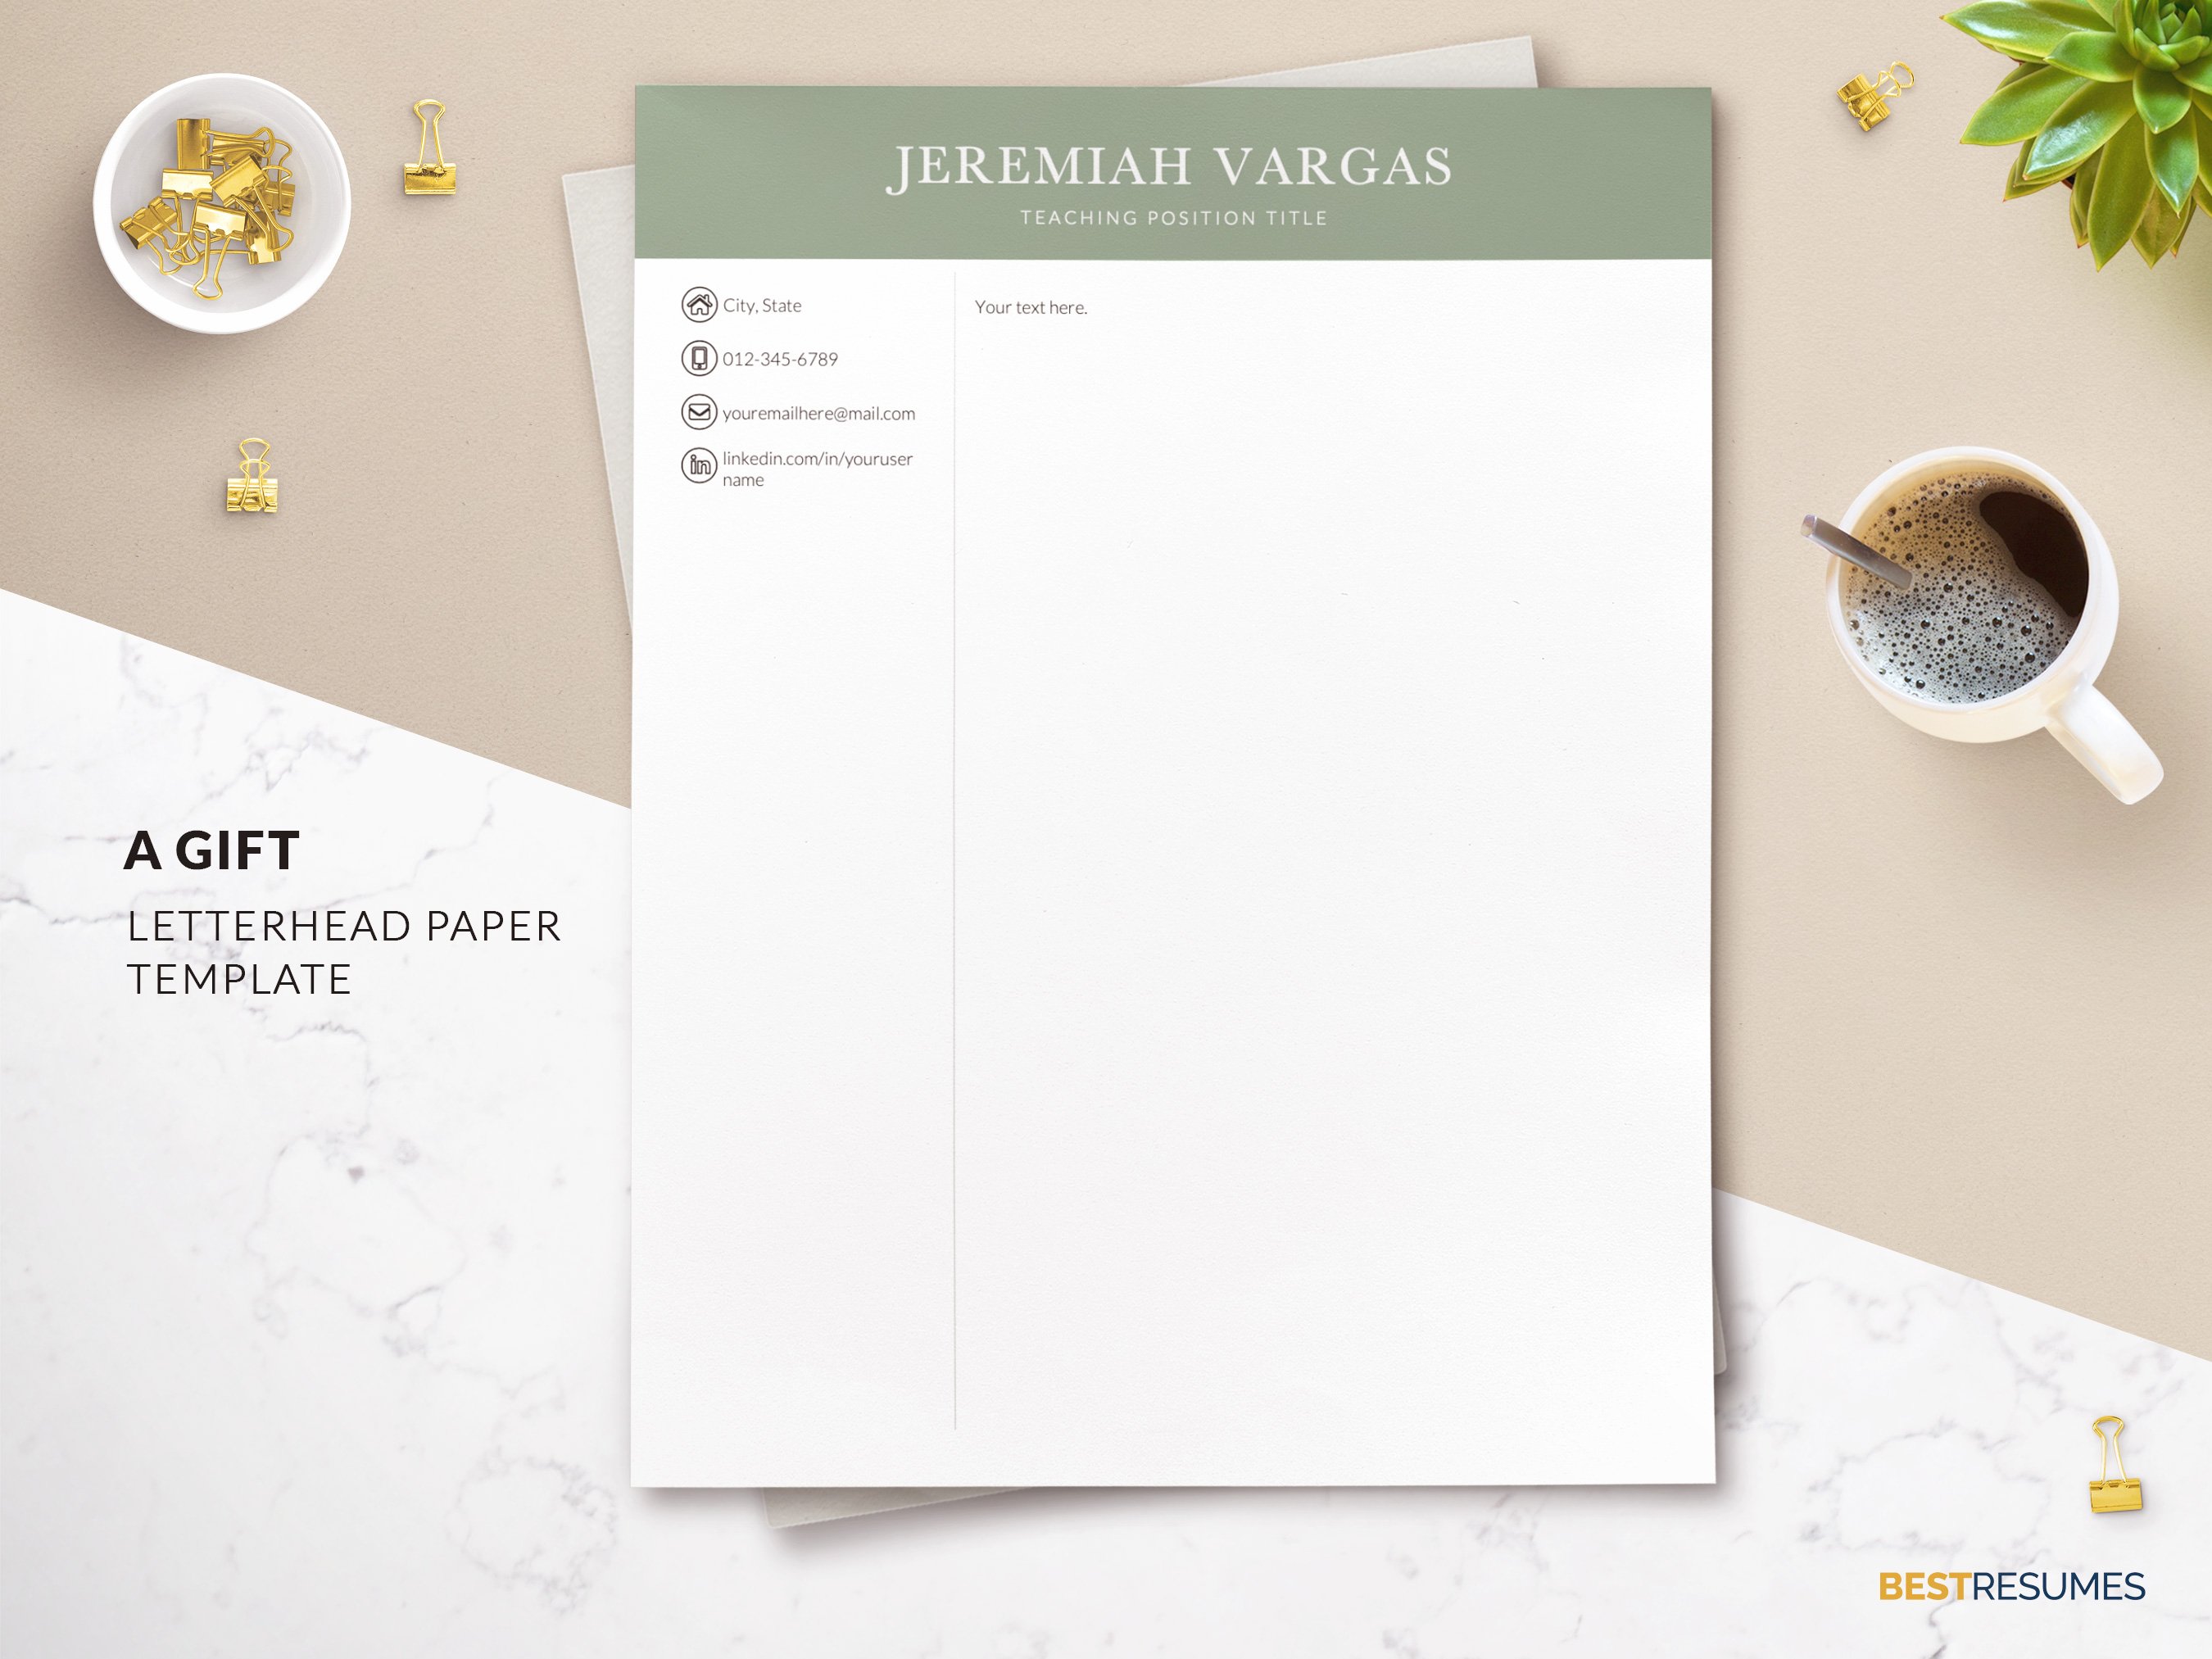 resume template for teachers letterhead template jeremiah vargas 911